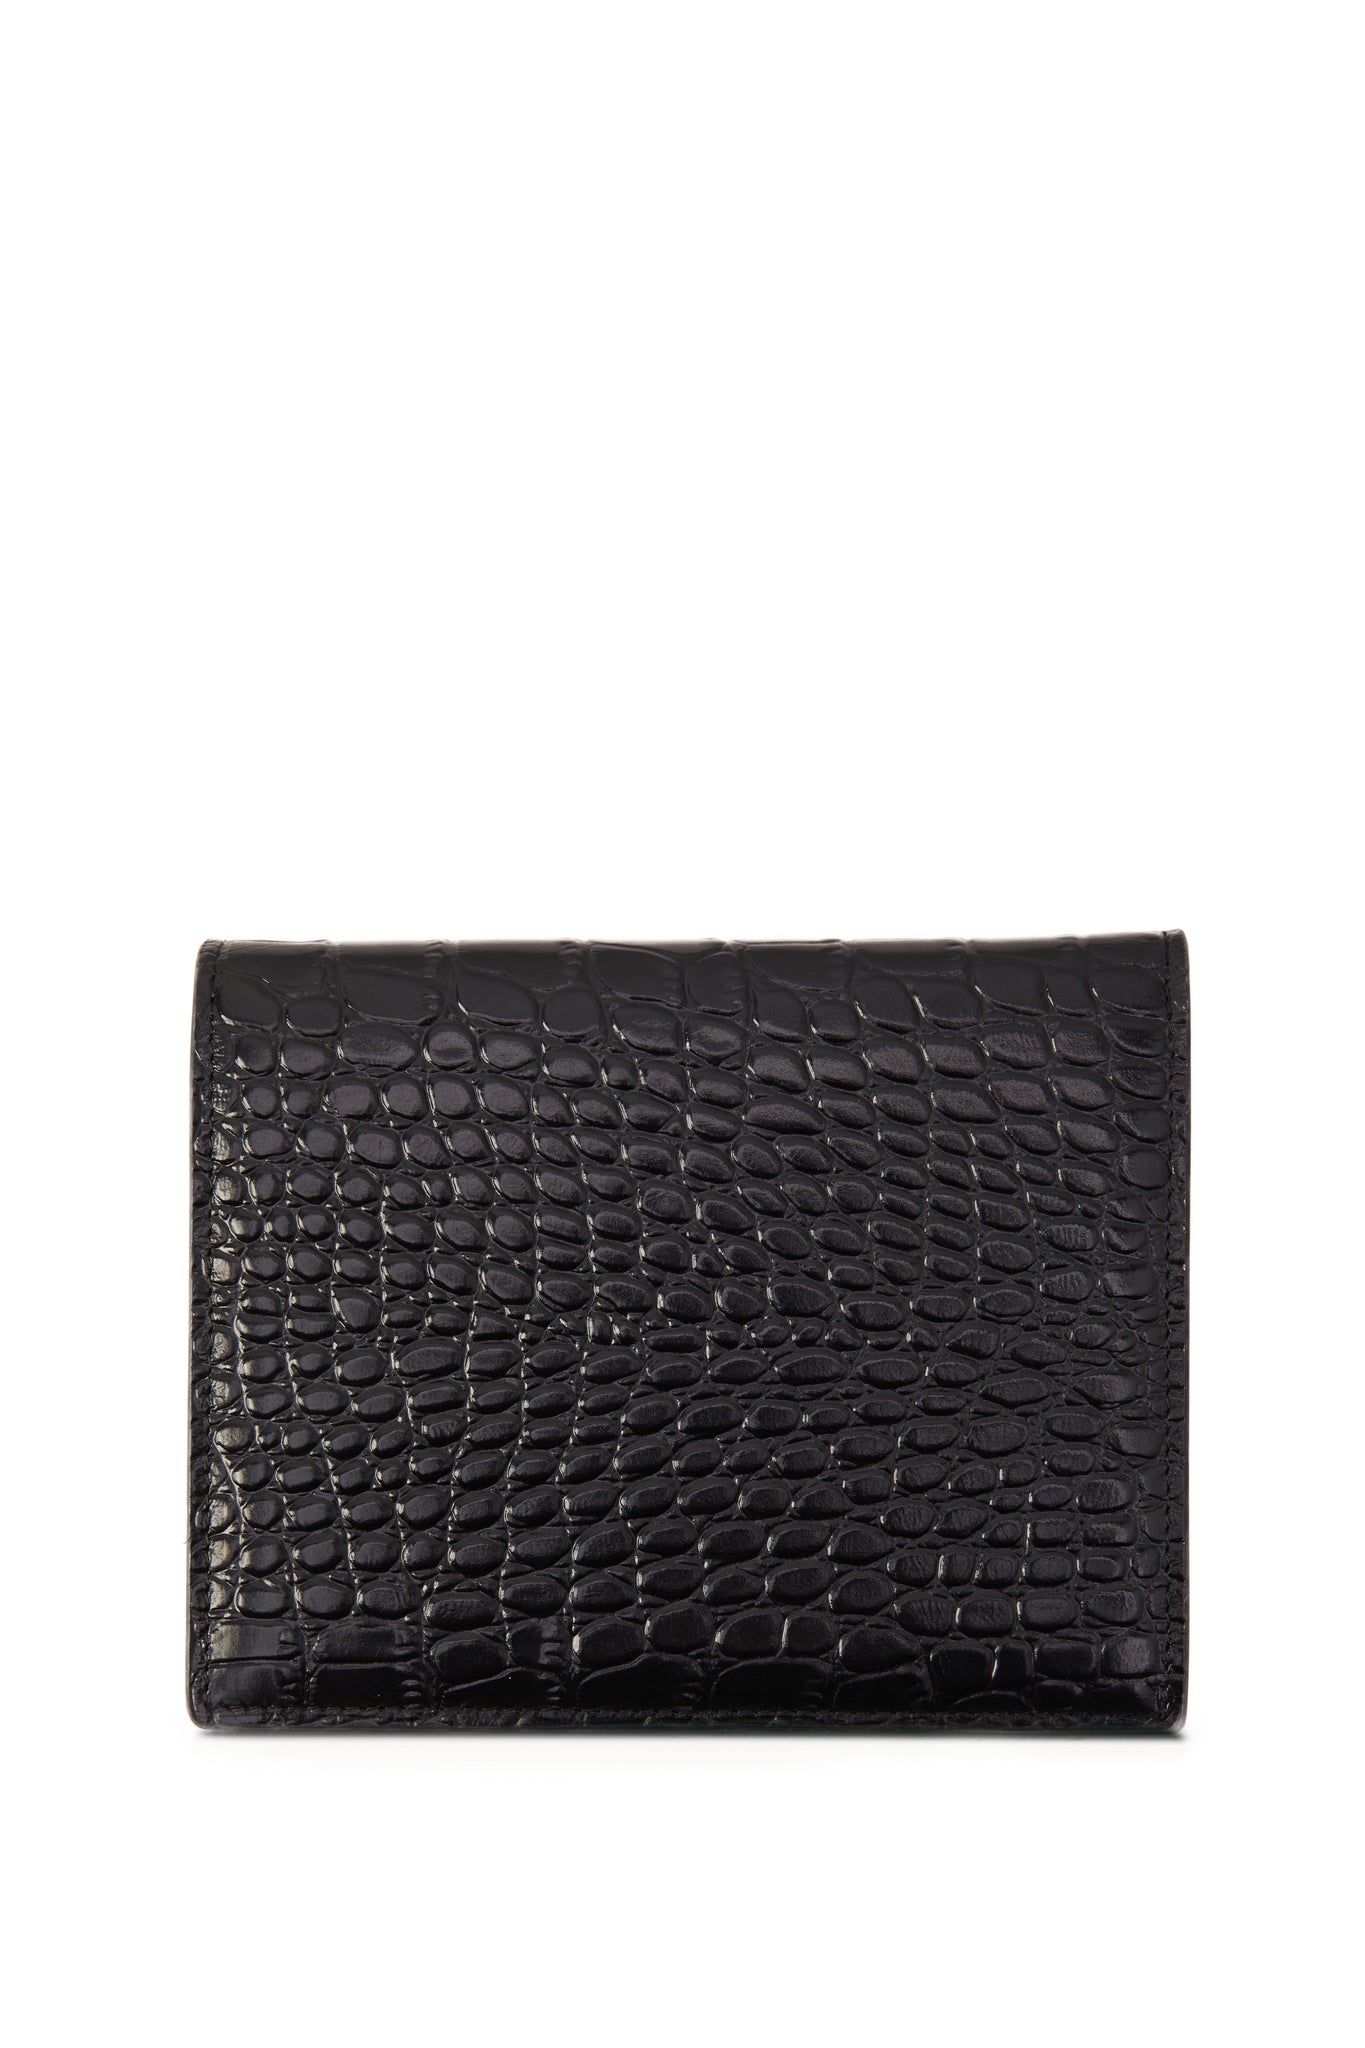 Chelsea Wallet (Black Croc)